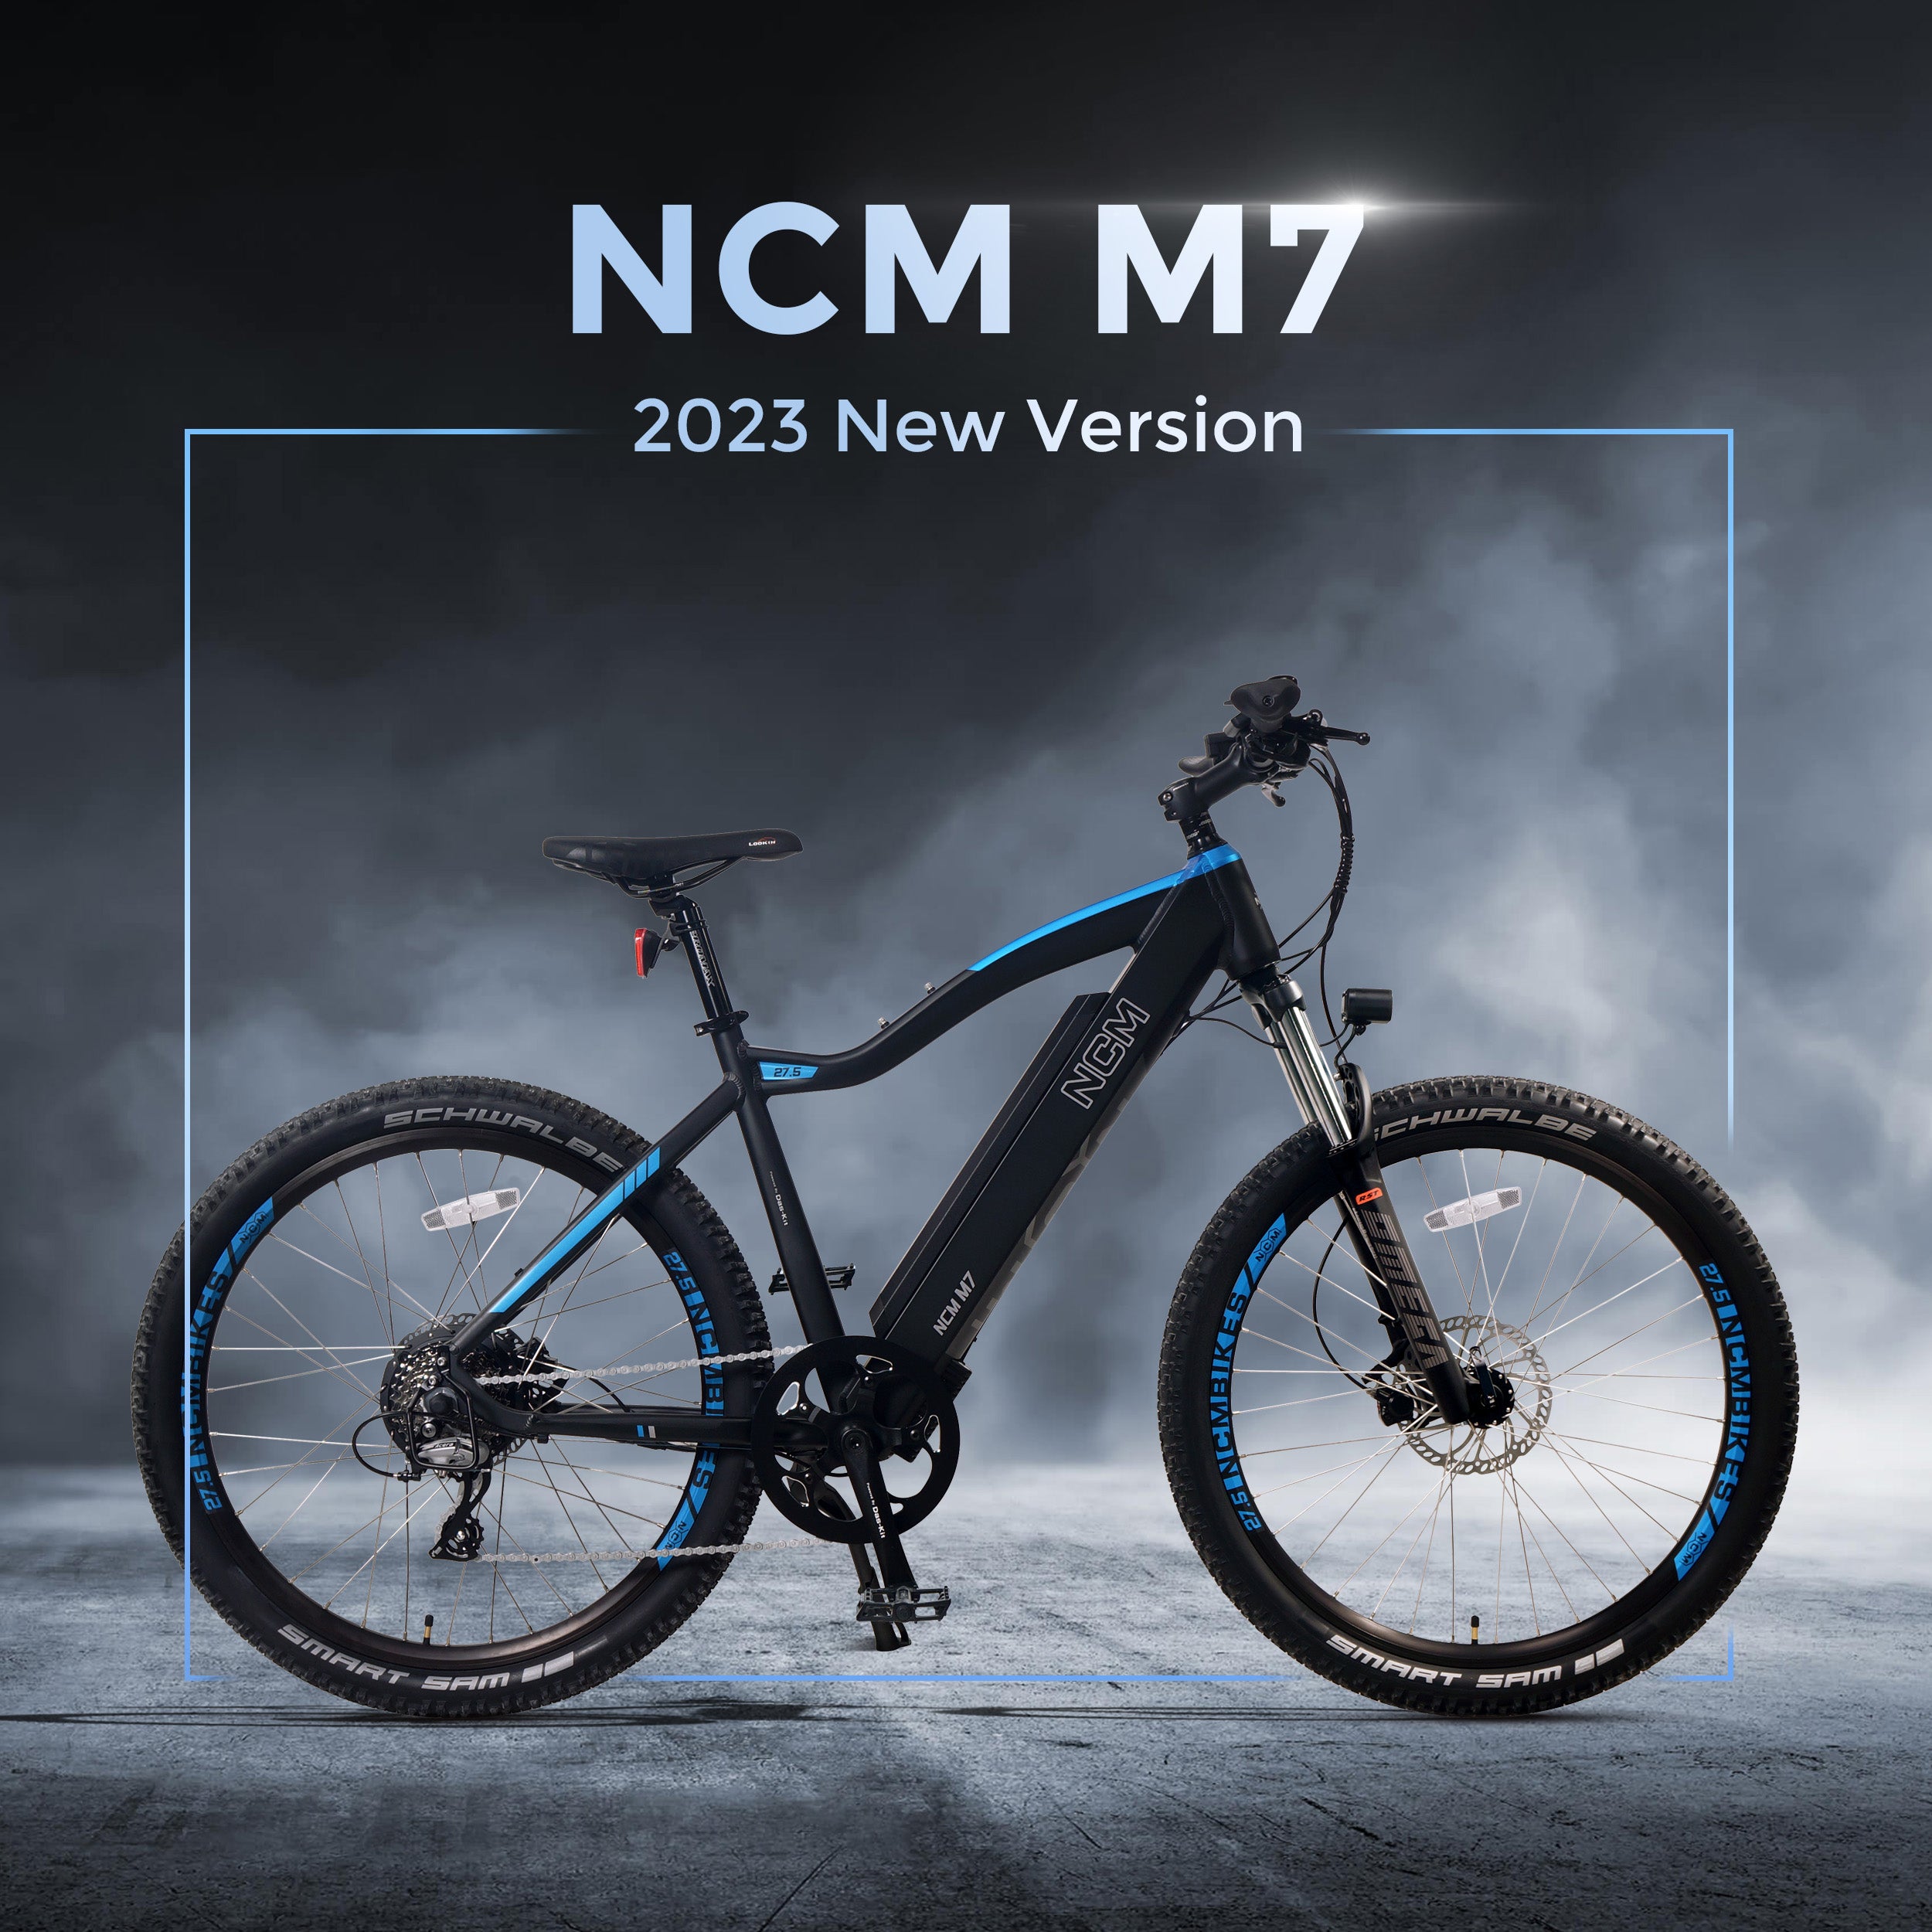 NCM M7